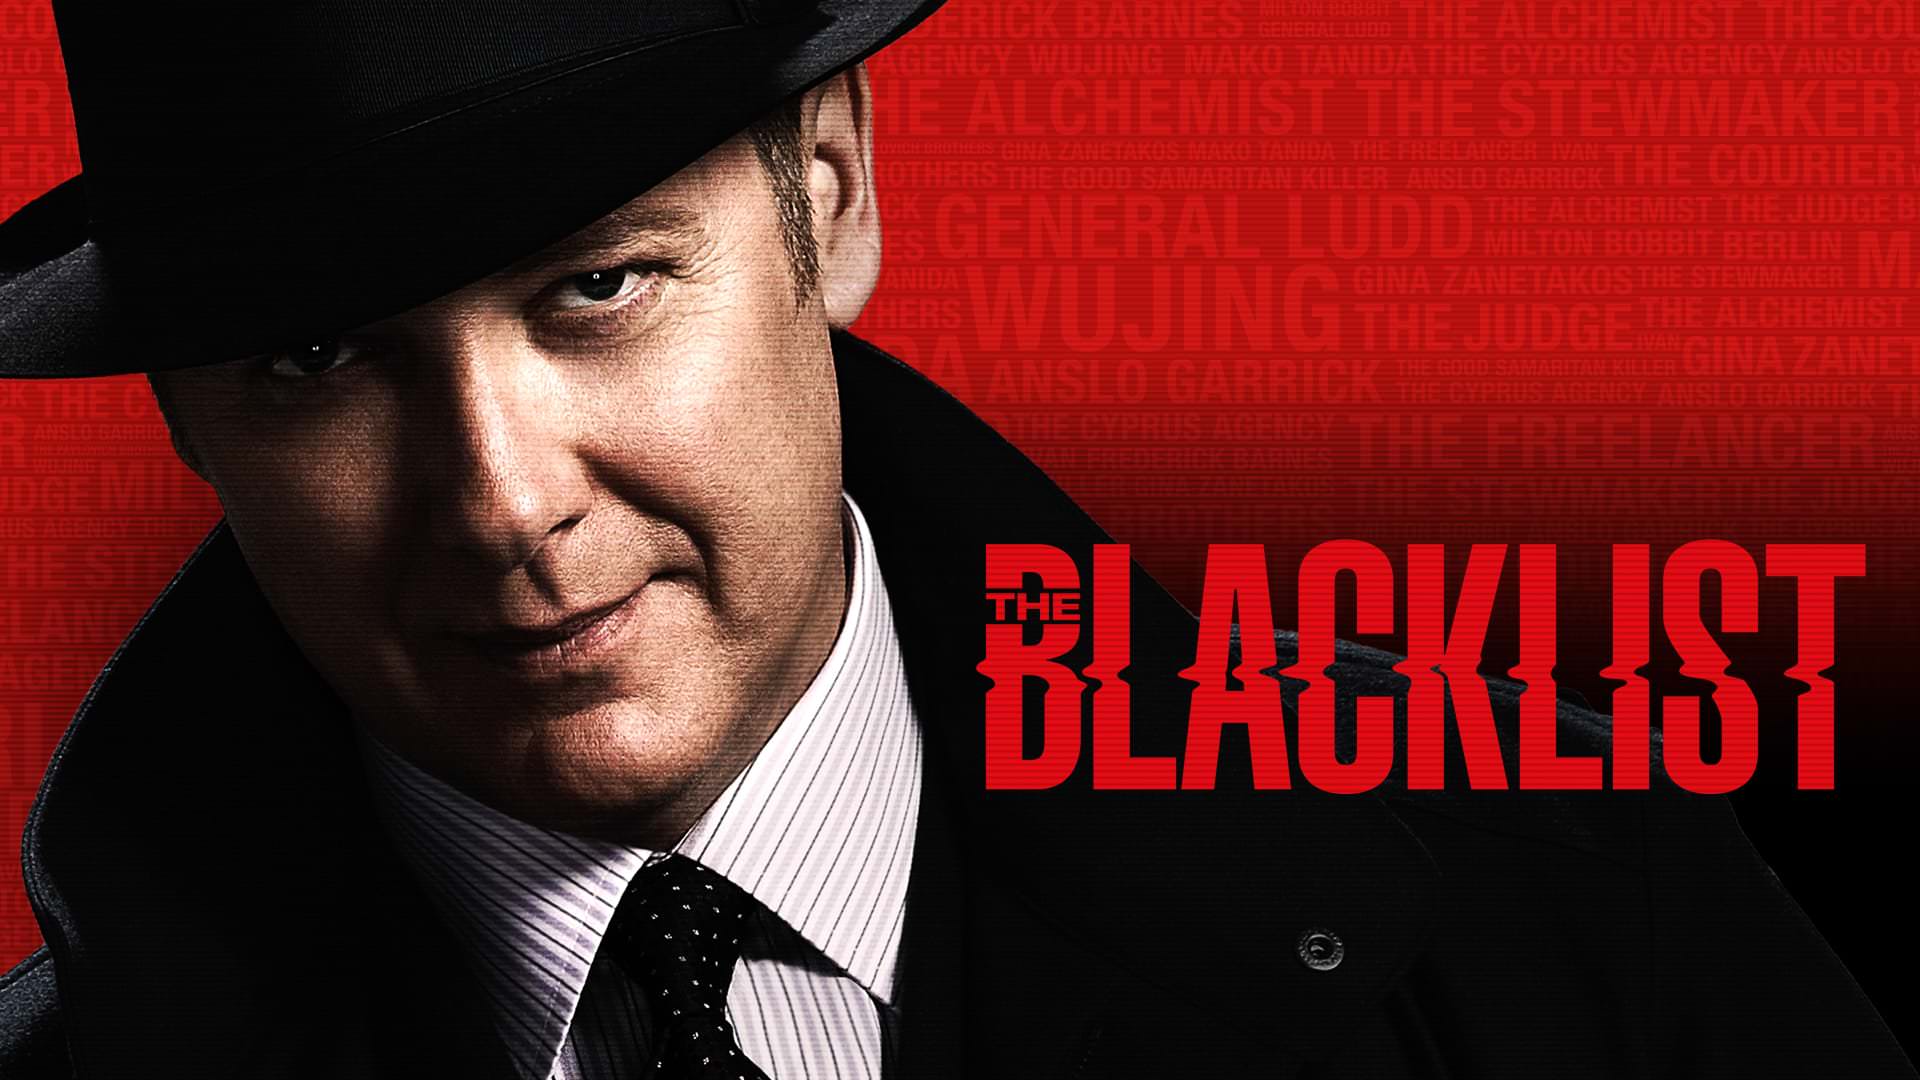 The Blacklist Season 3 Laptop HD HD 4k Wallpaper, Image